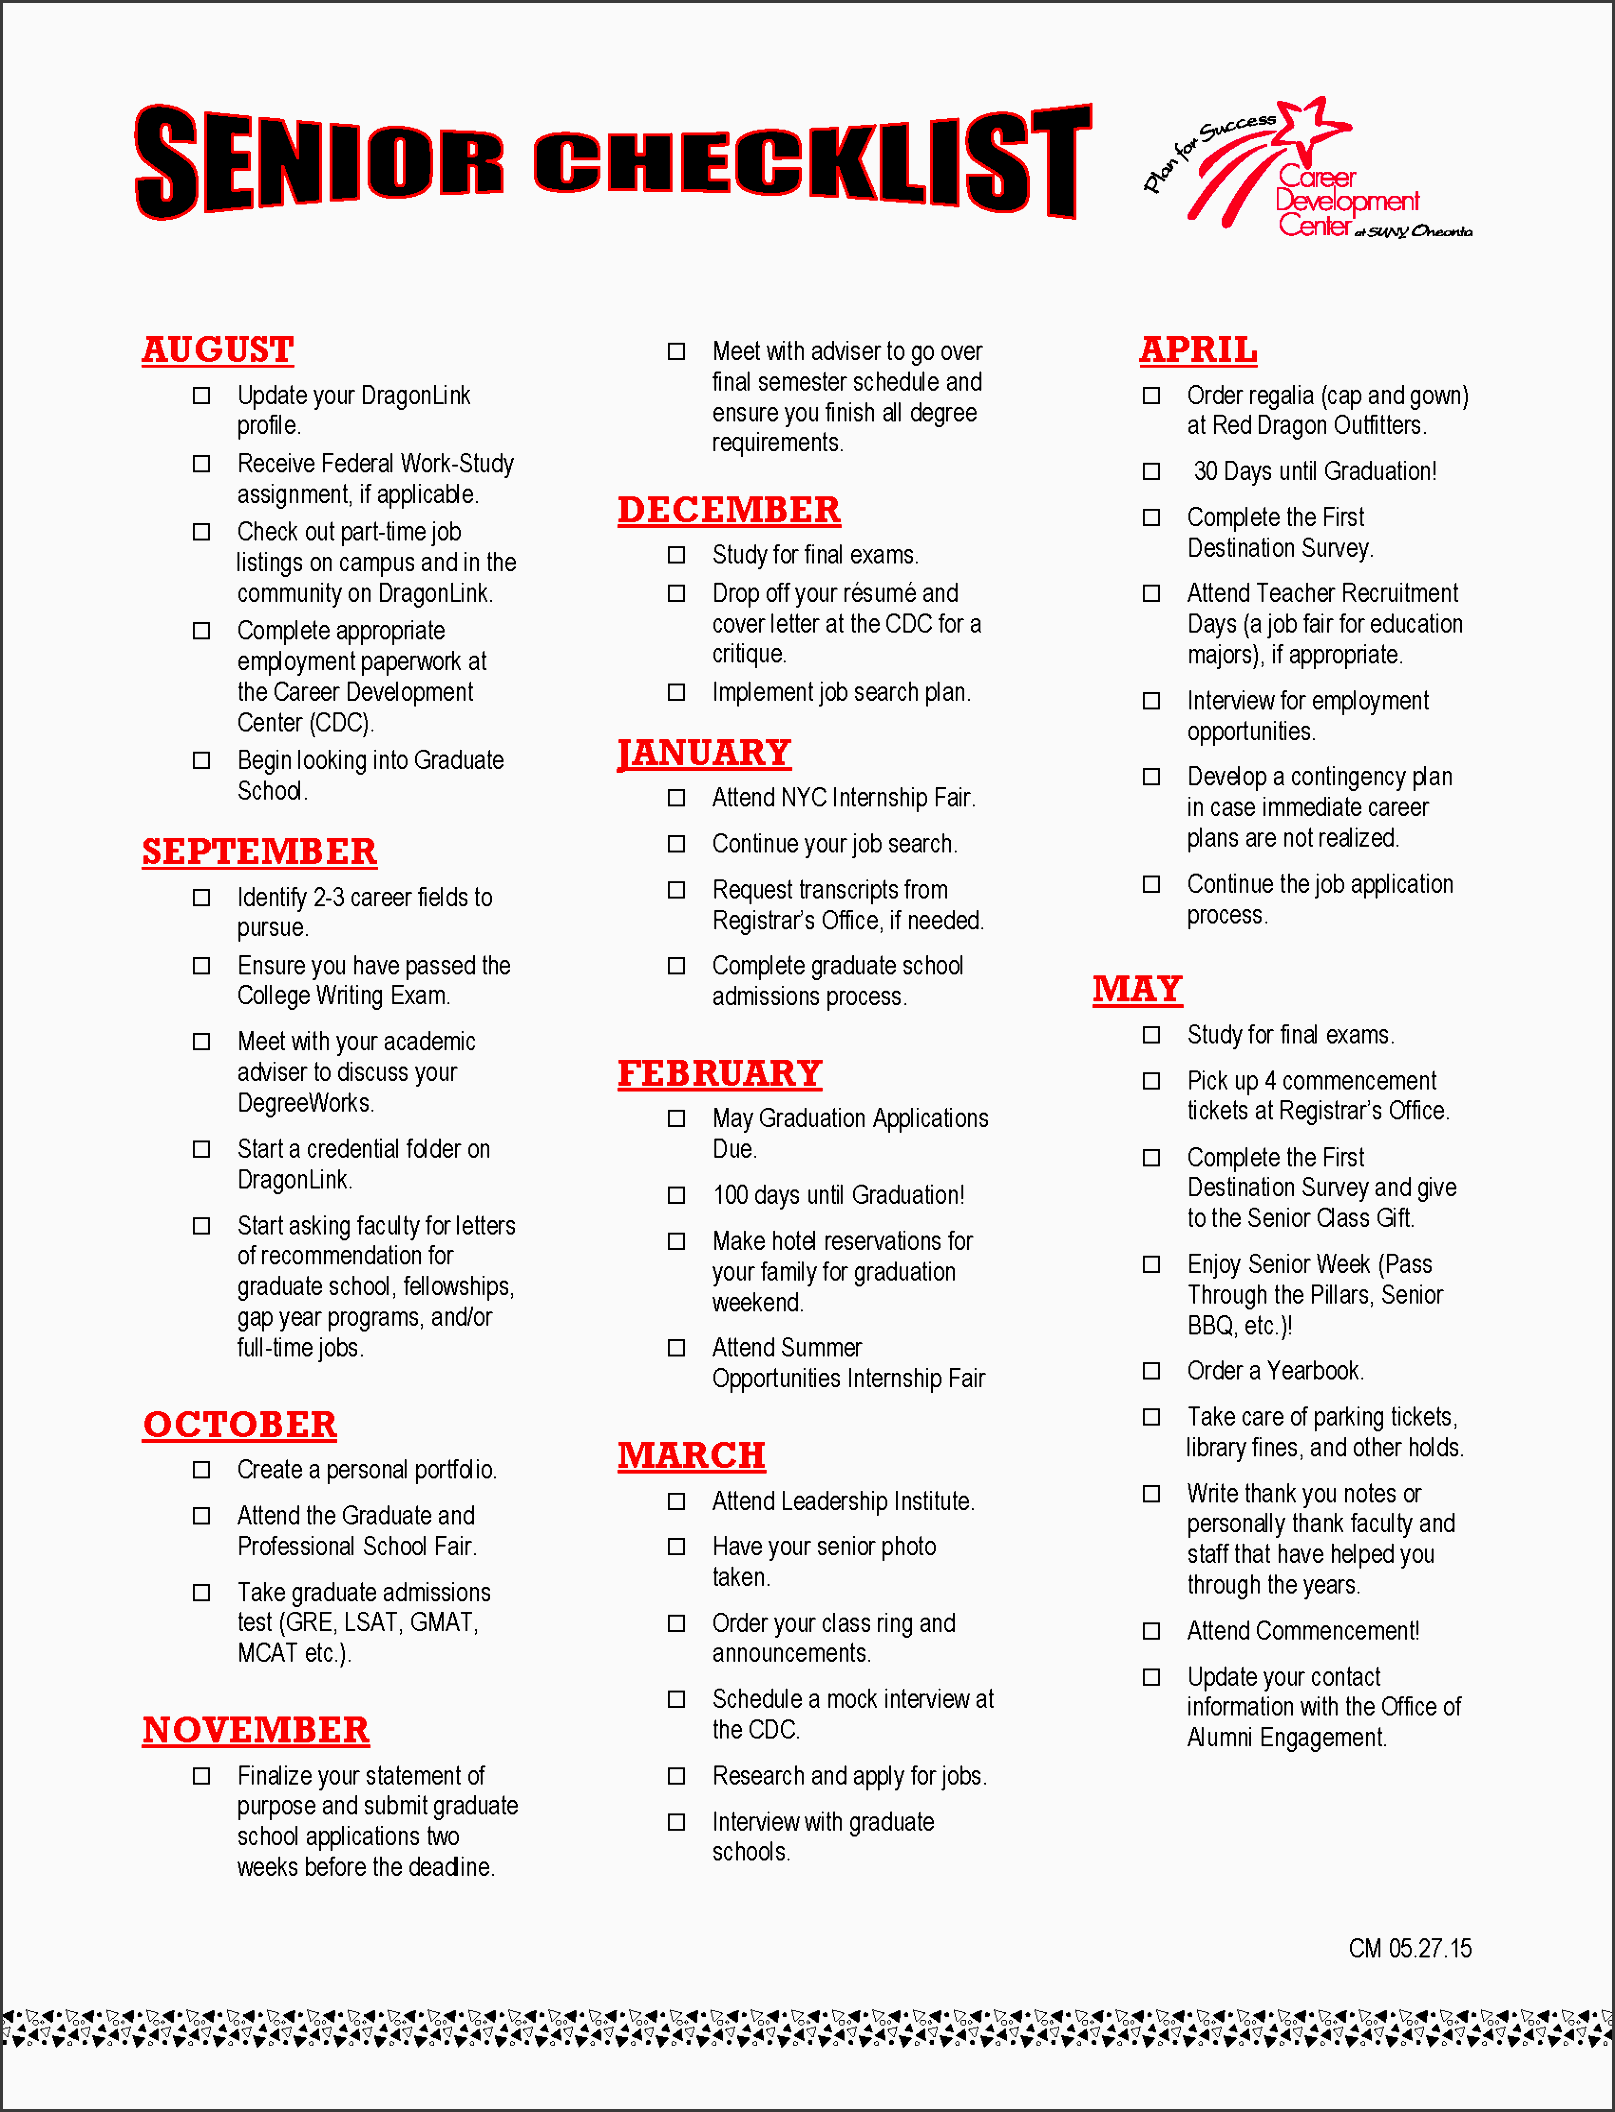 11 Employee Career Planning Checklist SampleTemplatess SampleTemplatess